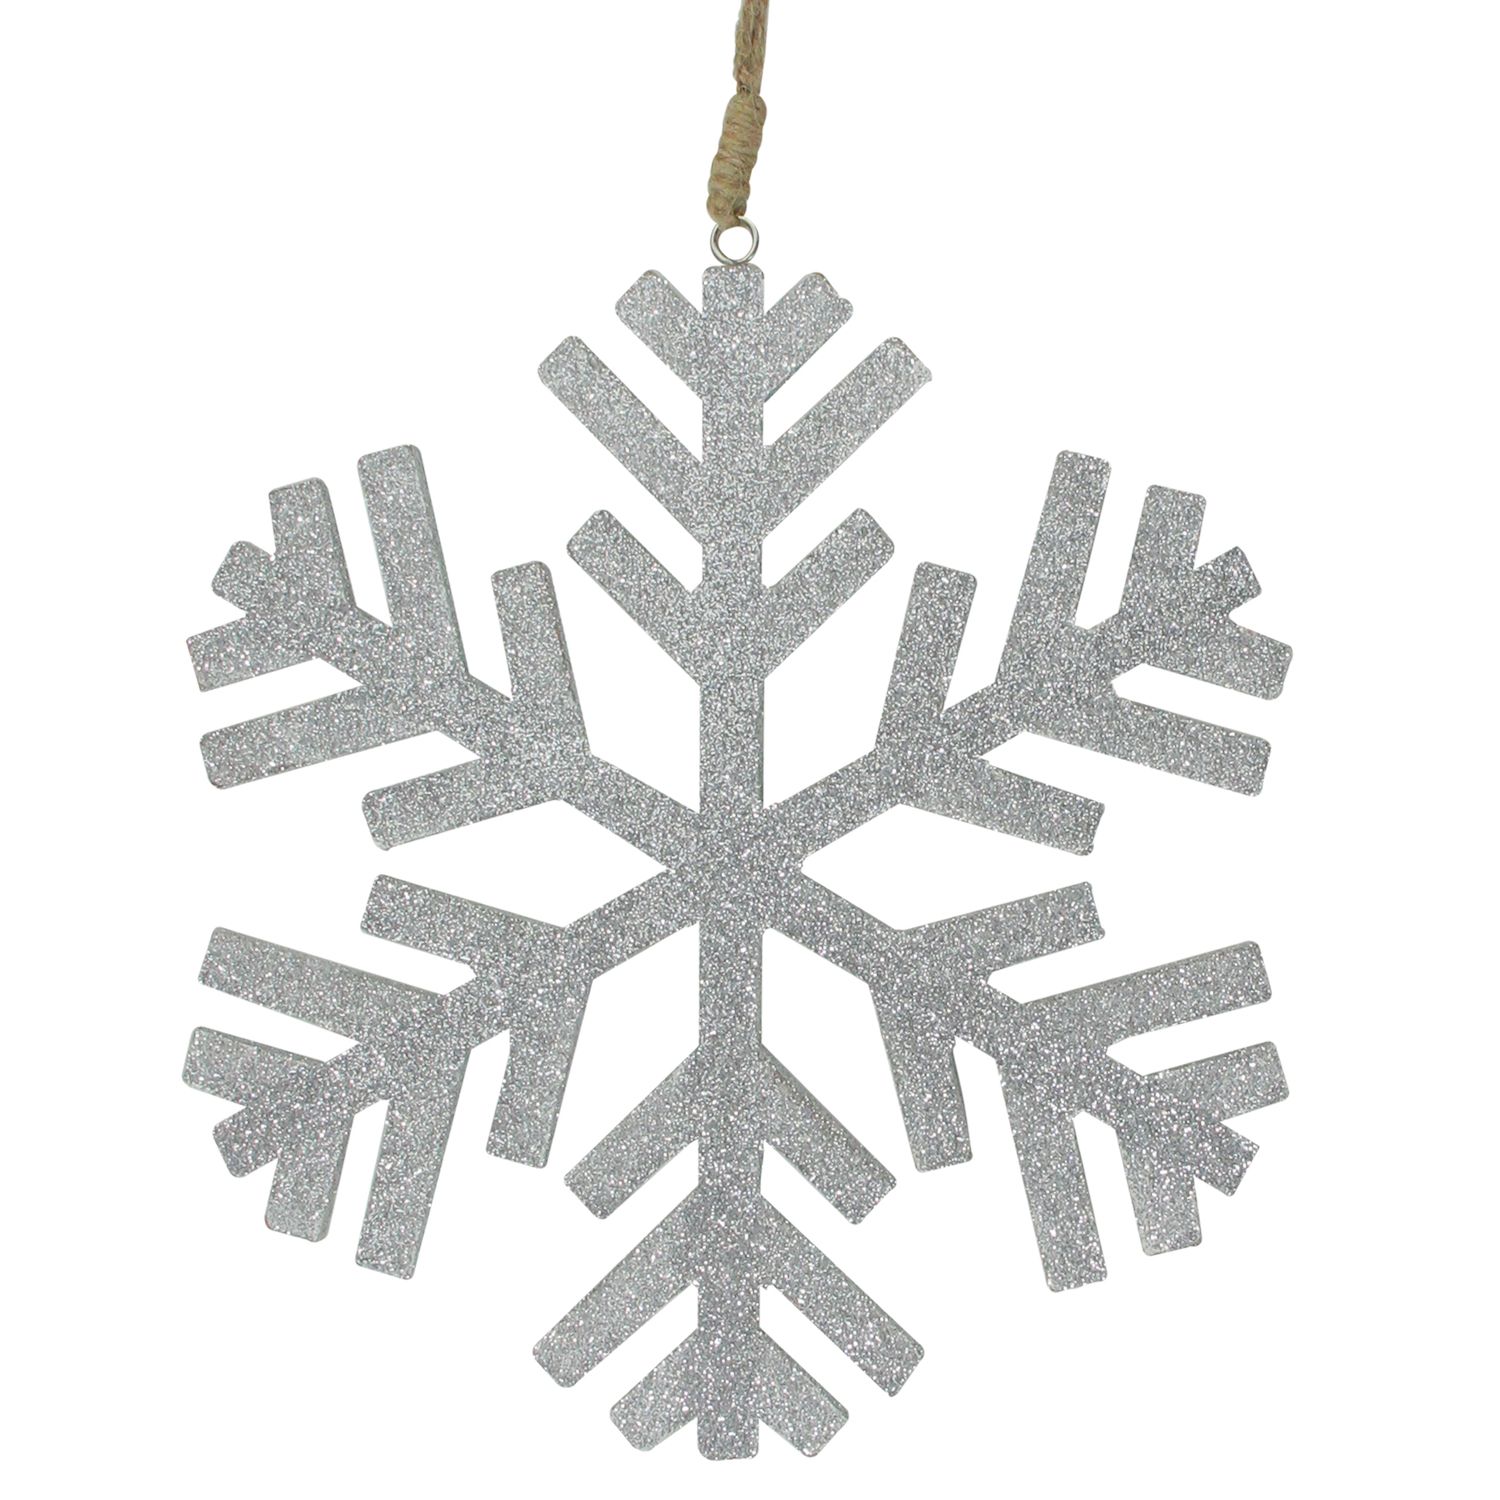 Large Wood Holiday Snowflake Wall Decor